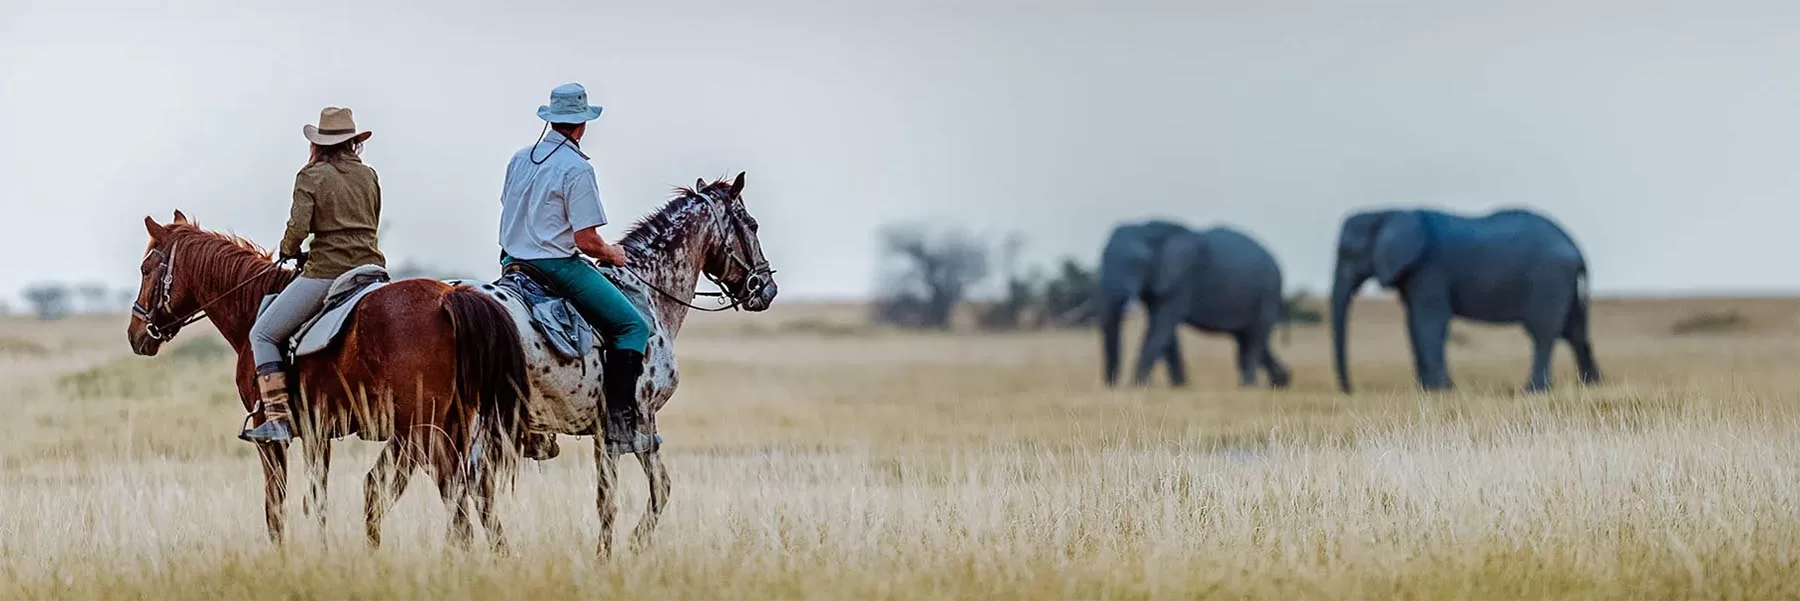 Horse Riding In Tanzania